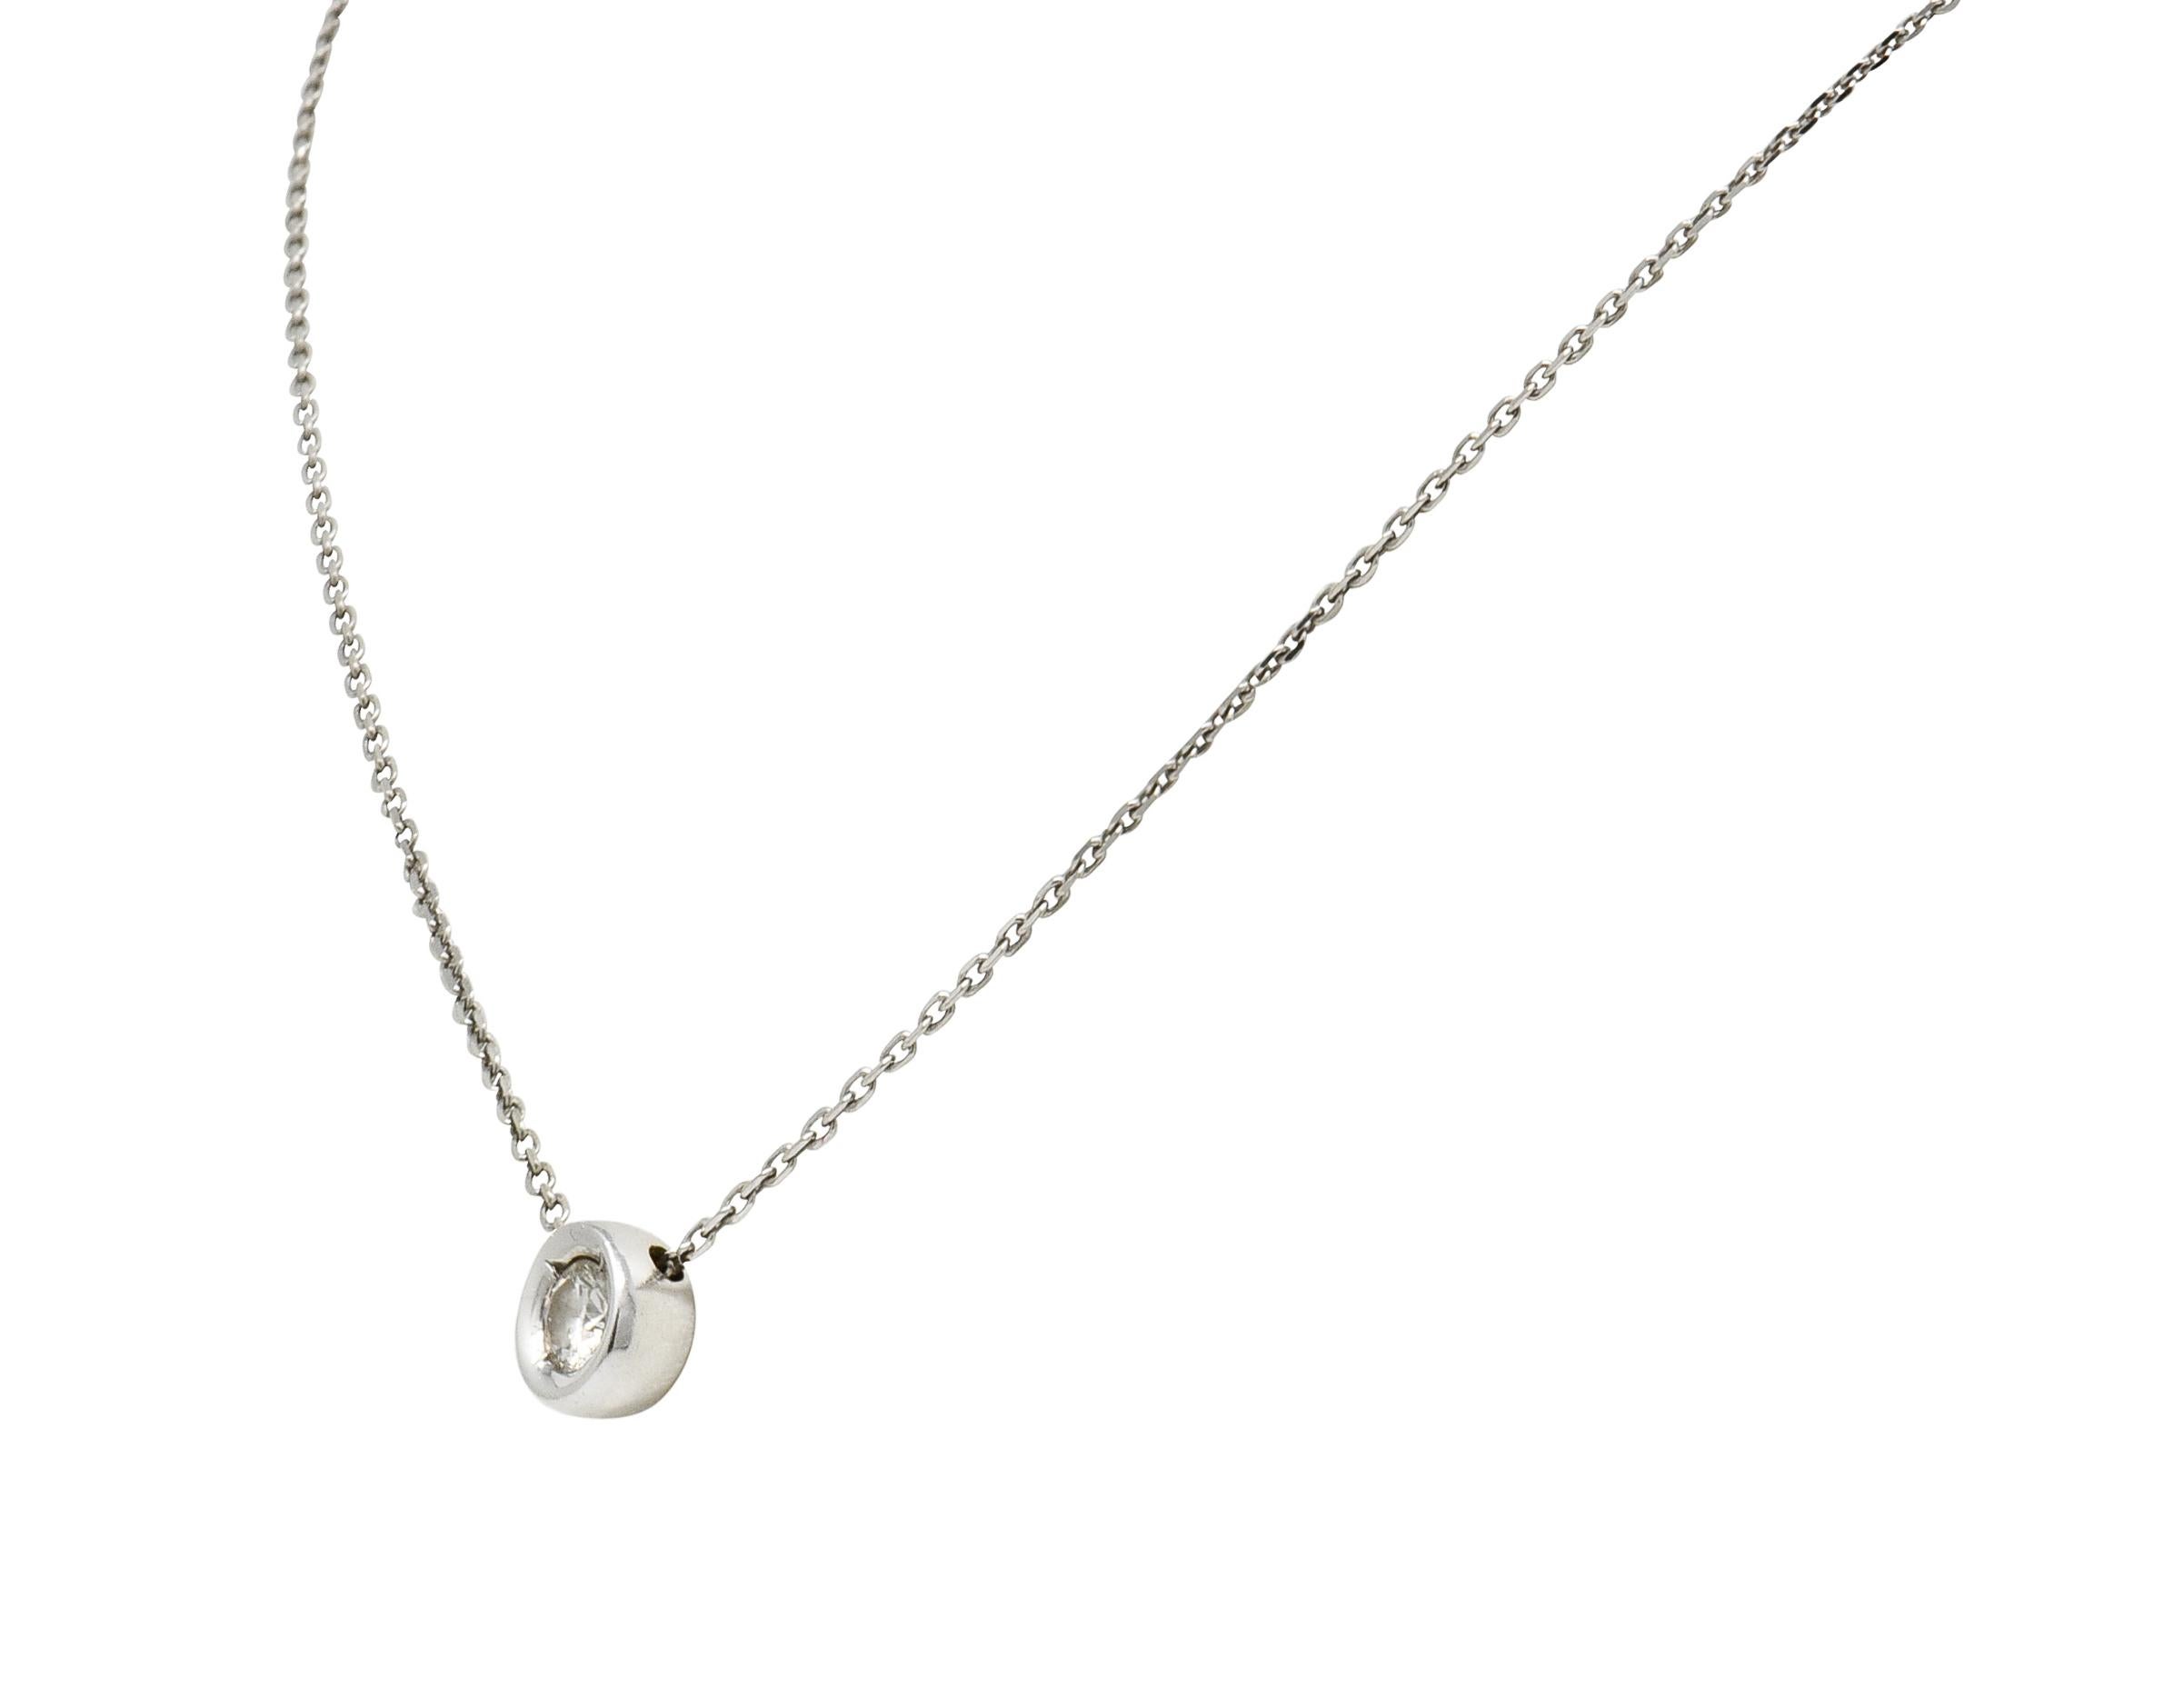 Brilliant Cut Contemporary 0.25 Carat Diamond Solitaire 14 Karat White Gold Necklace